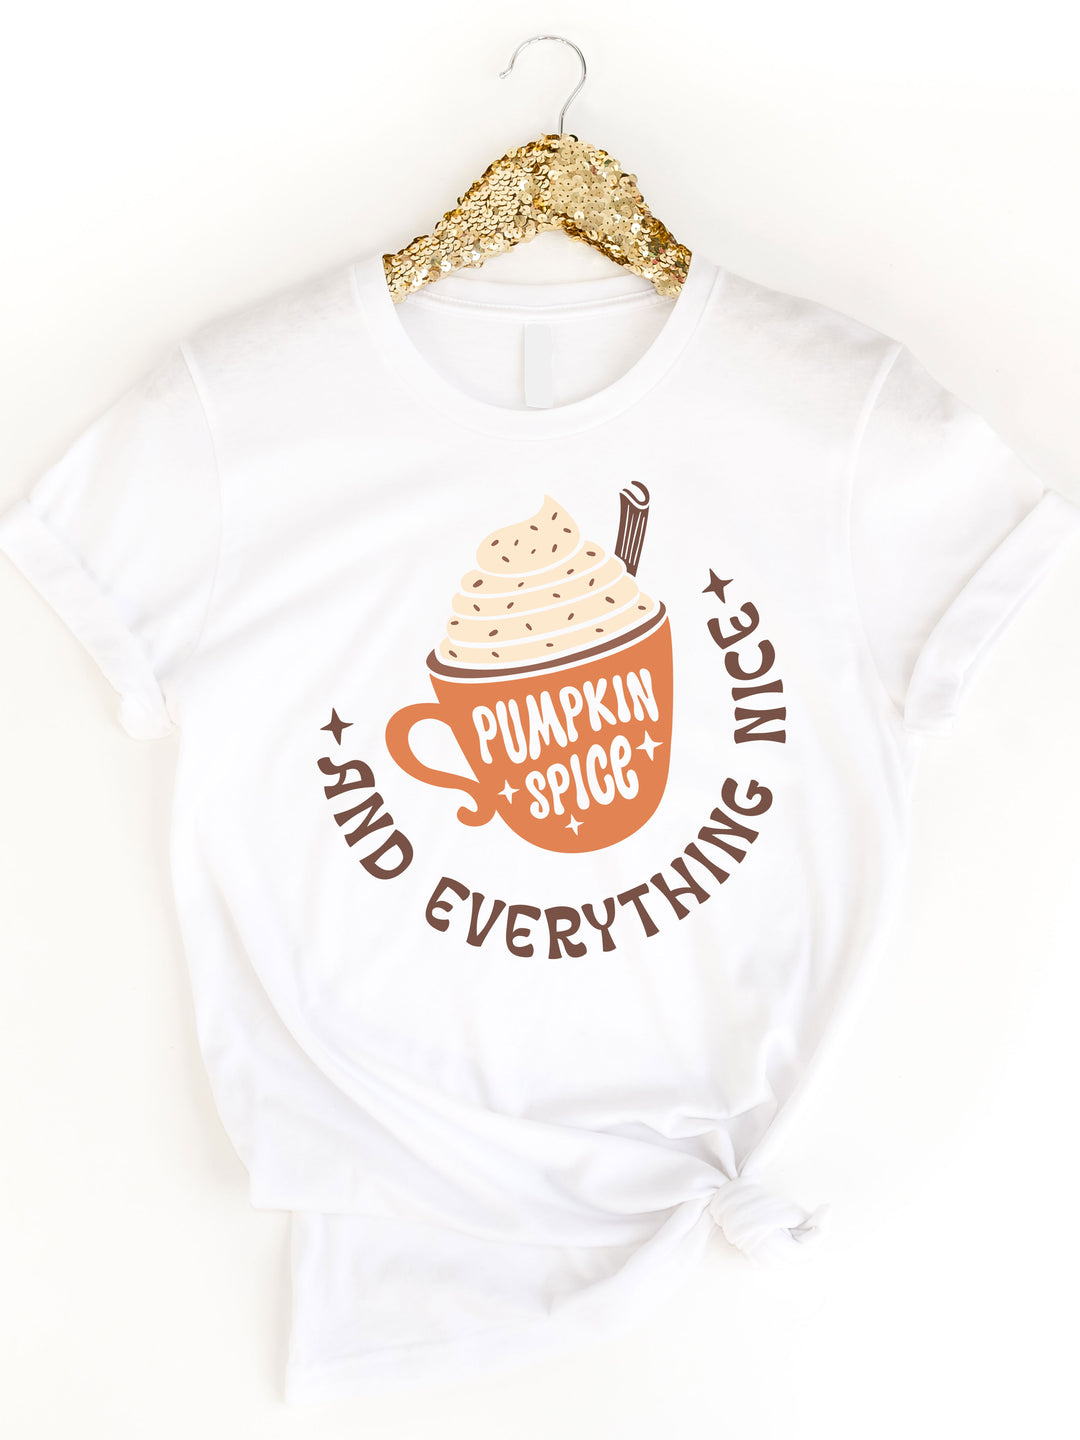 Pumpkin Spice & Everything Nice Latte Graphic Tee